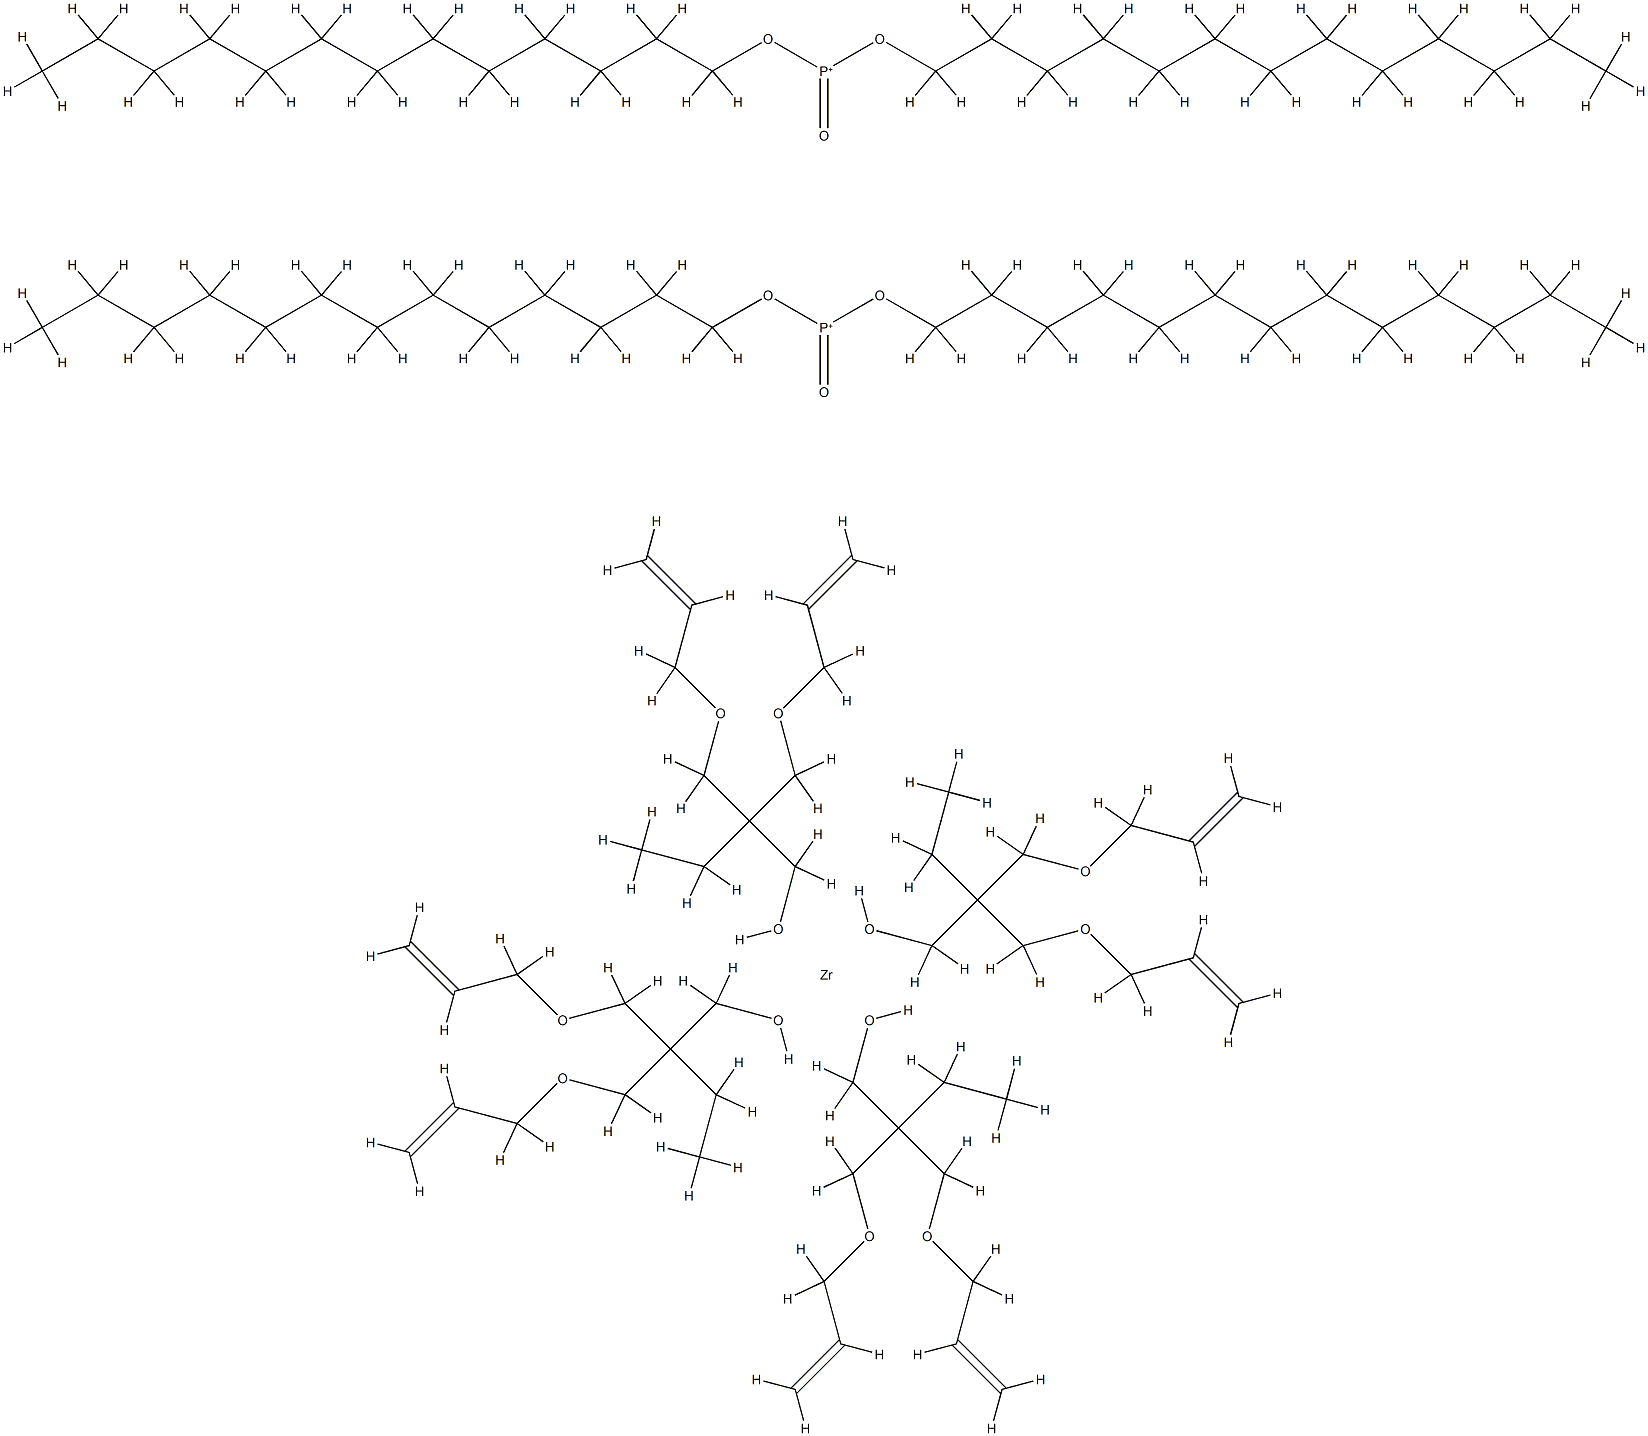 Zirconate(2-), tetrakis2,2-bis(2-propenyloxy)methyl-1-butanolato-.kappa.Obis(ditridecyl phosphito-.kappa.O)-, dihydrogen|KZ 55